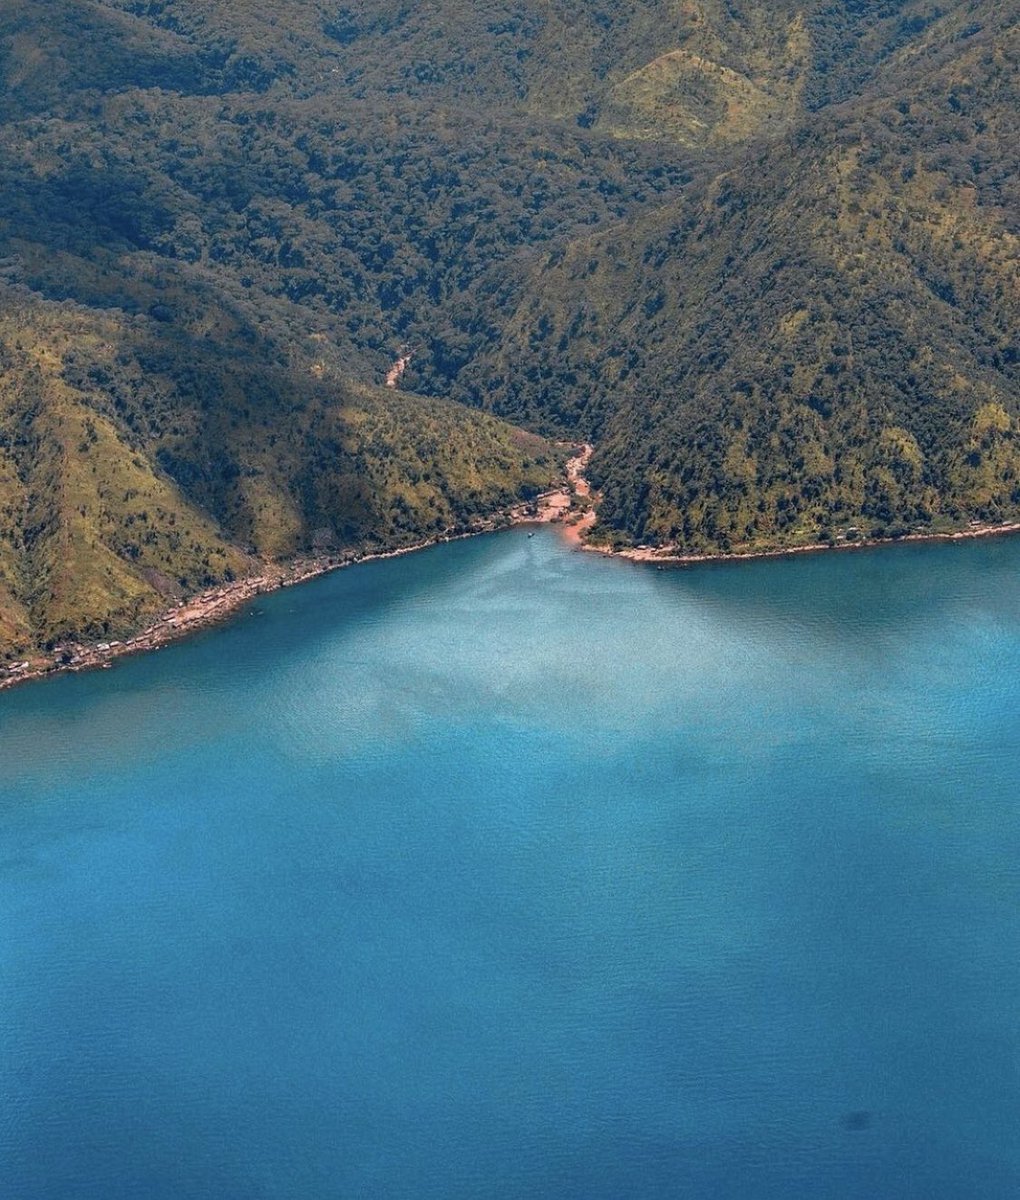 Озеро танганьика